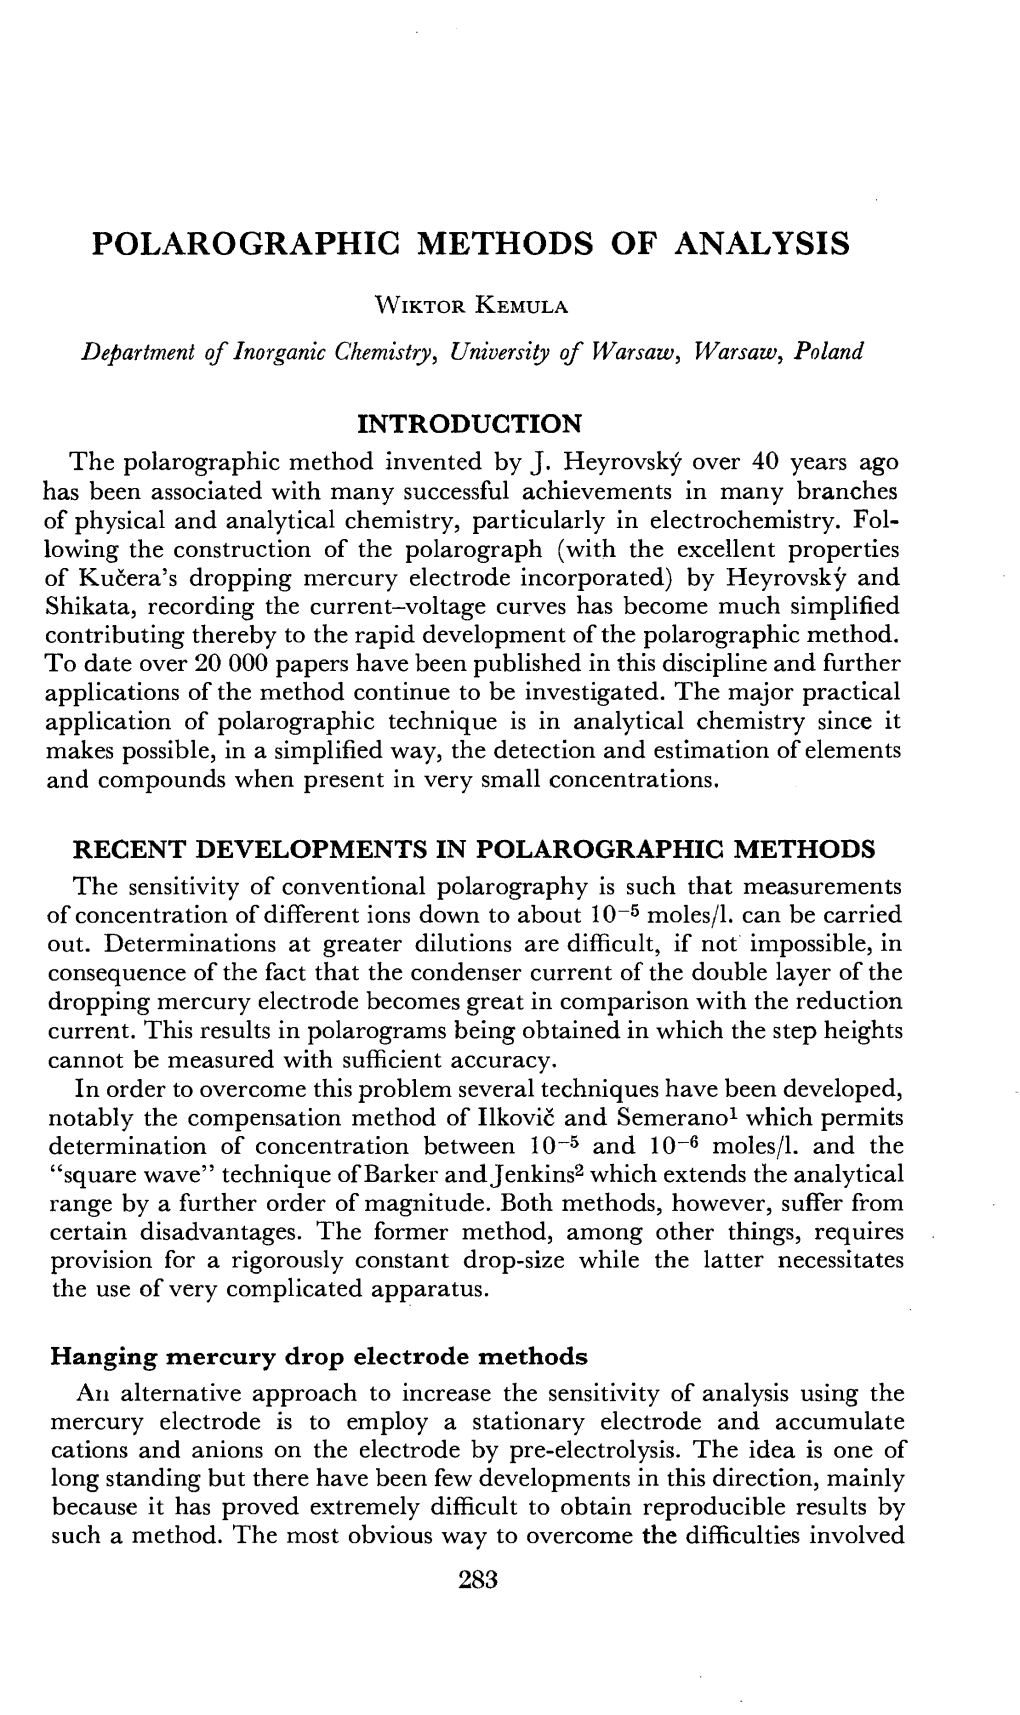 Polarographic Methods of Analysis